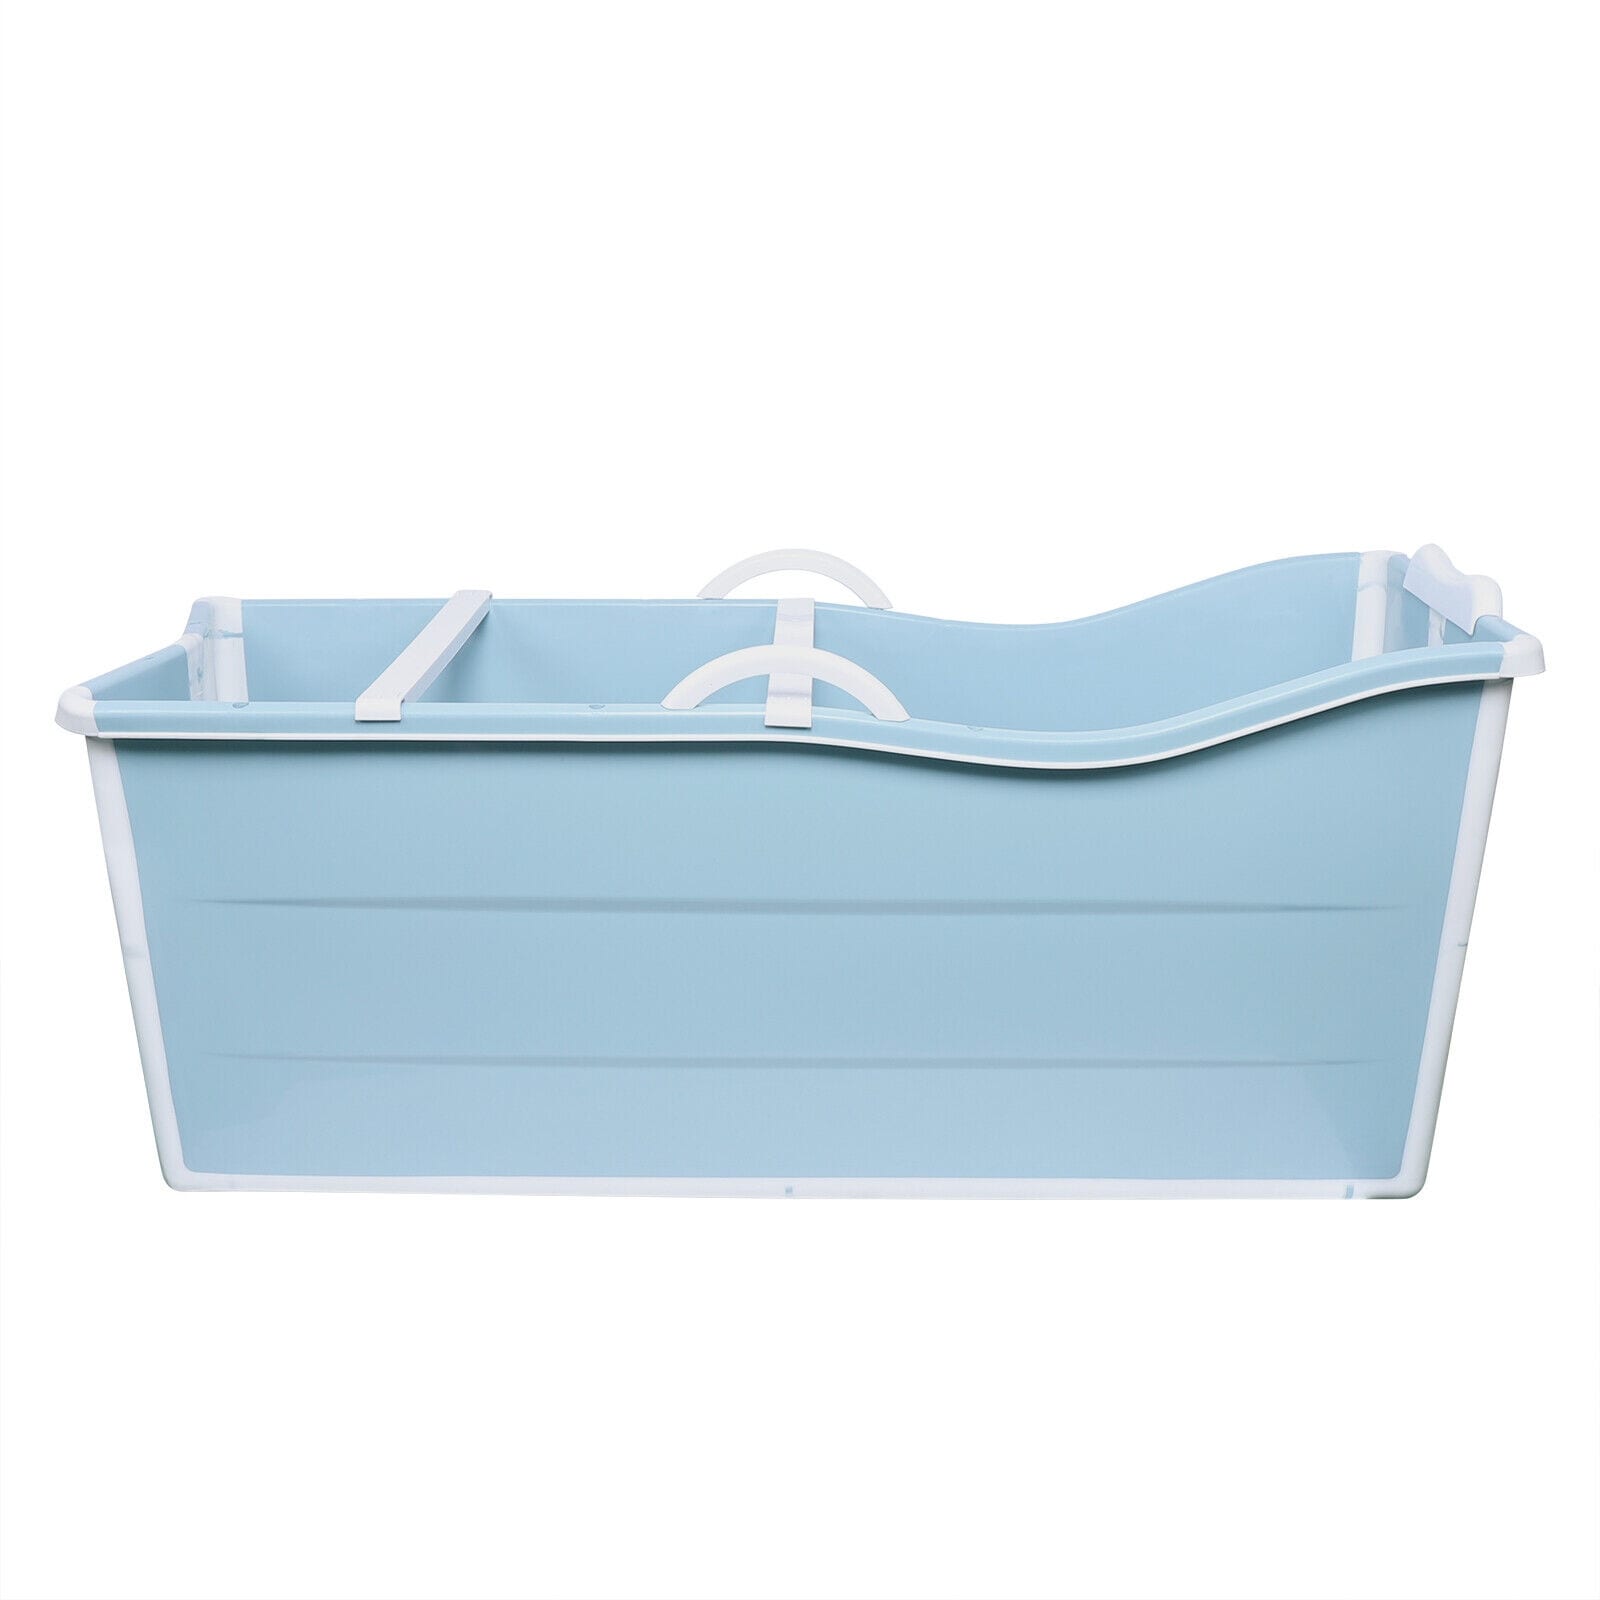 Aggregate more than 197 folding slipper tub